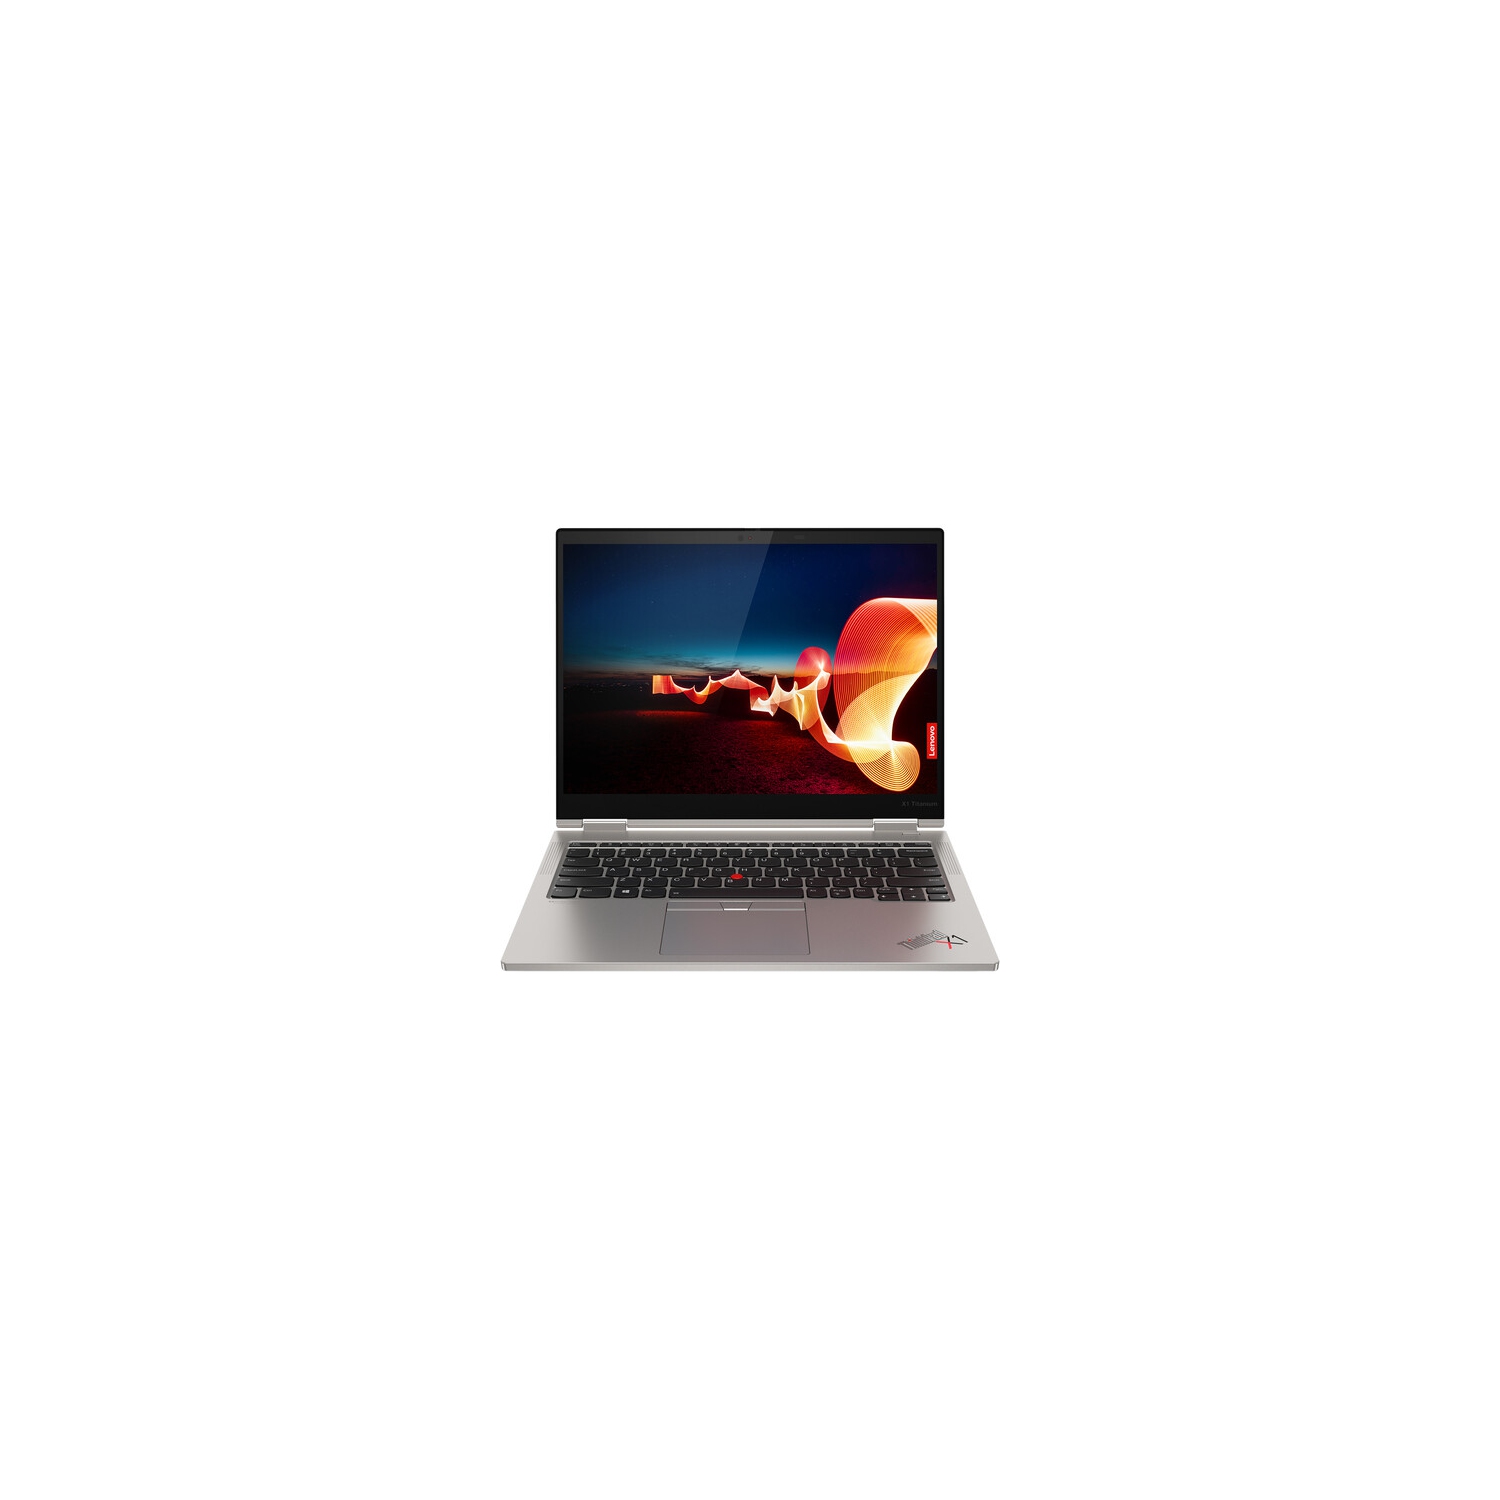 Lenovo ThinkPad X1 Yoga Gen 1 13.5" 2-in-1 Laptop-Titanium(Intel Core i7 1160G7/512 GB SSD/16 GB RAM)- (20QA000RUS)- 3 Year Warranty